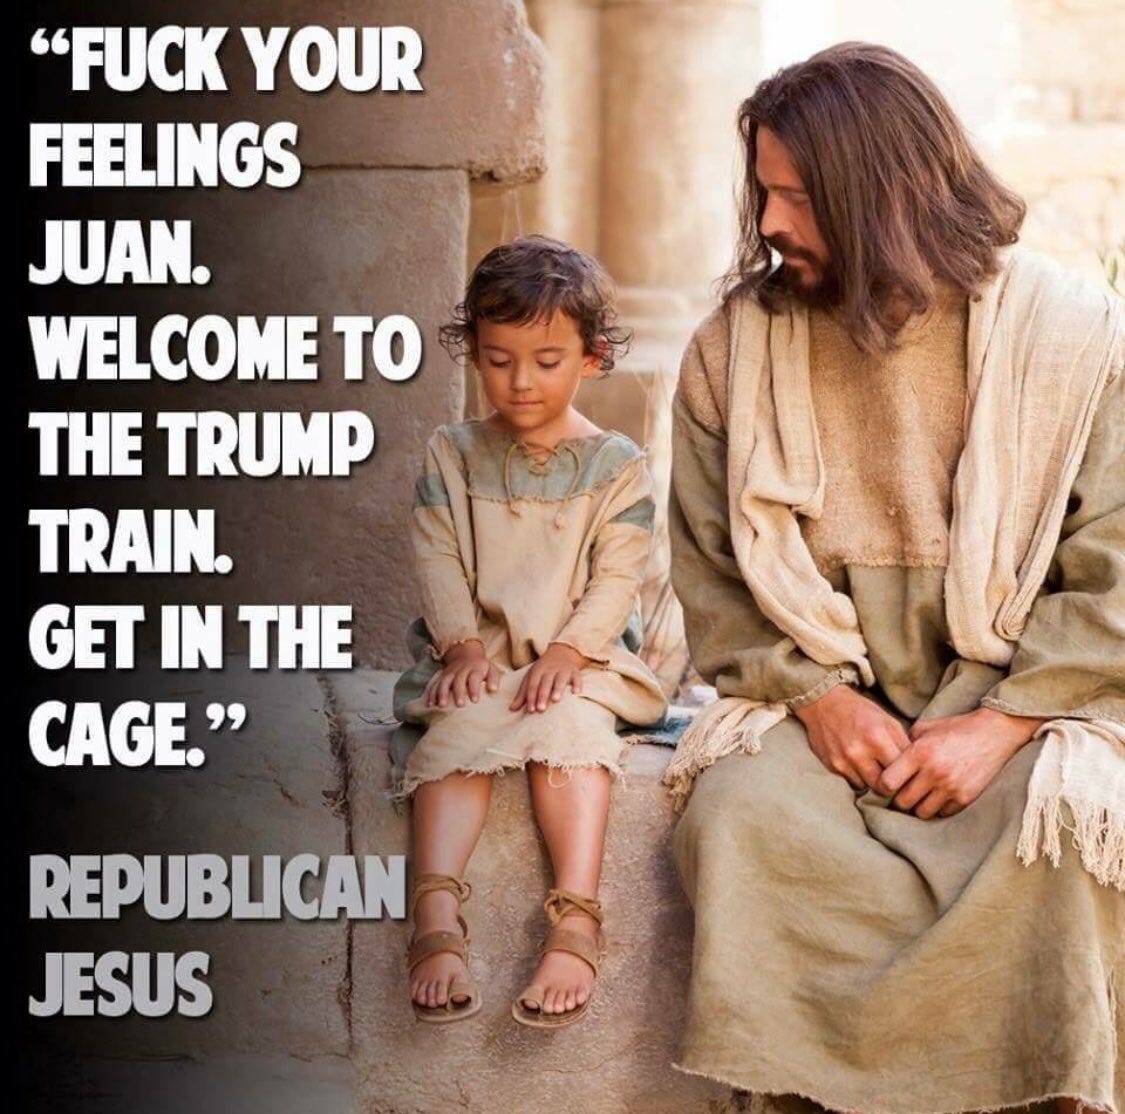 Turd Ferguson on Twitter: "Republican Jesus, is just like Trump and his hateful maggots."